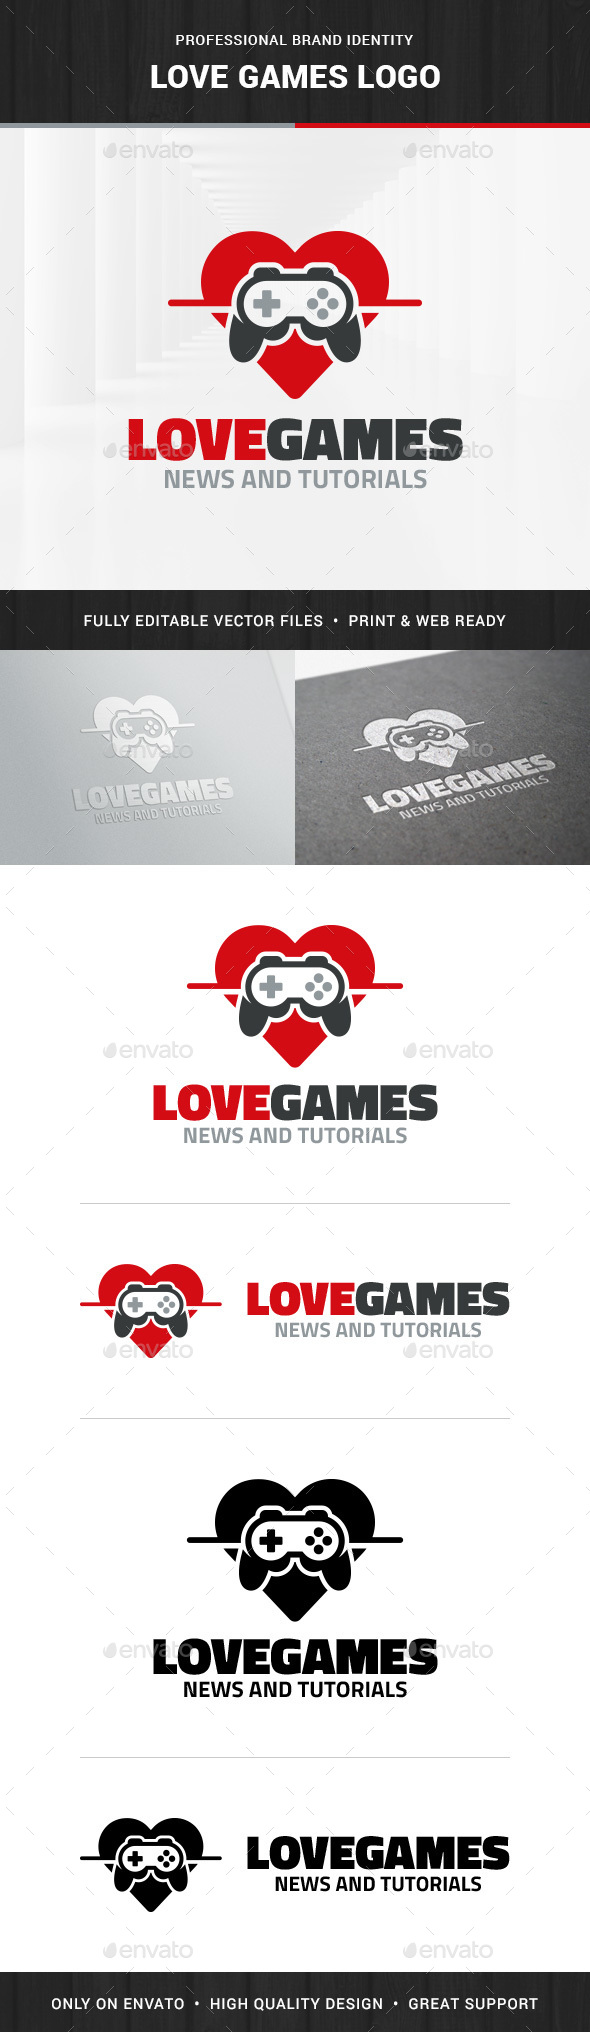 Love Games Logo Templates